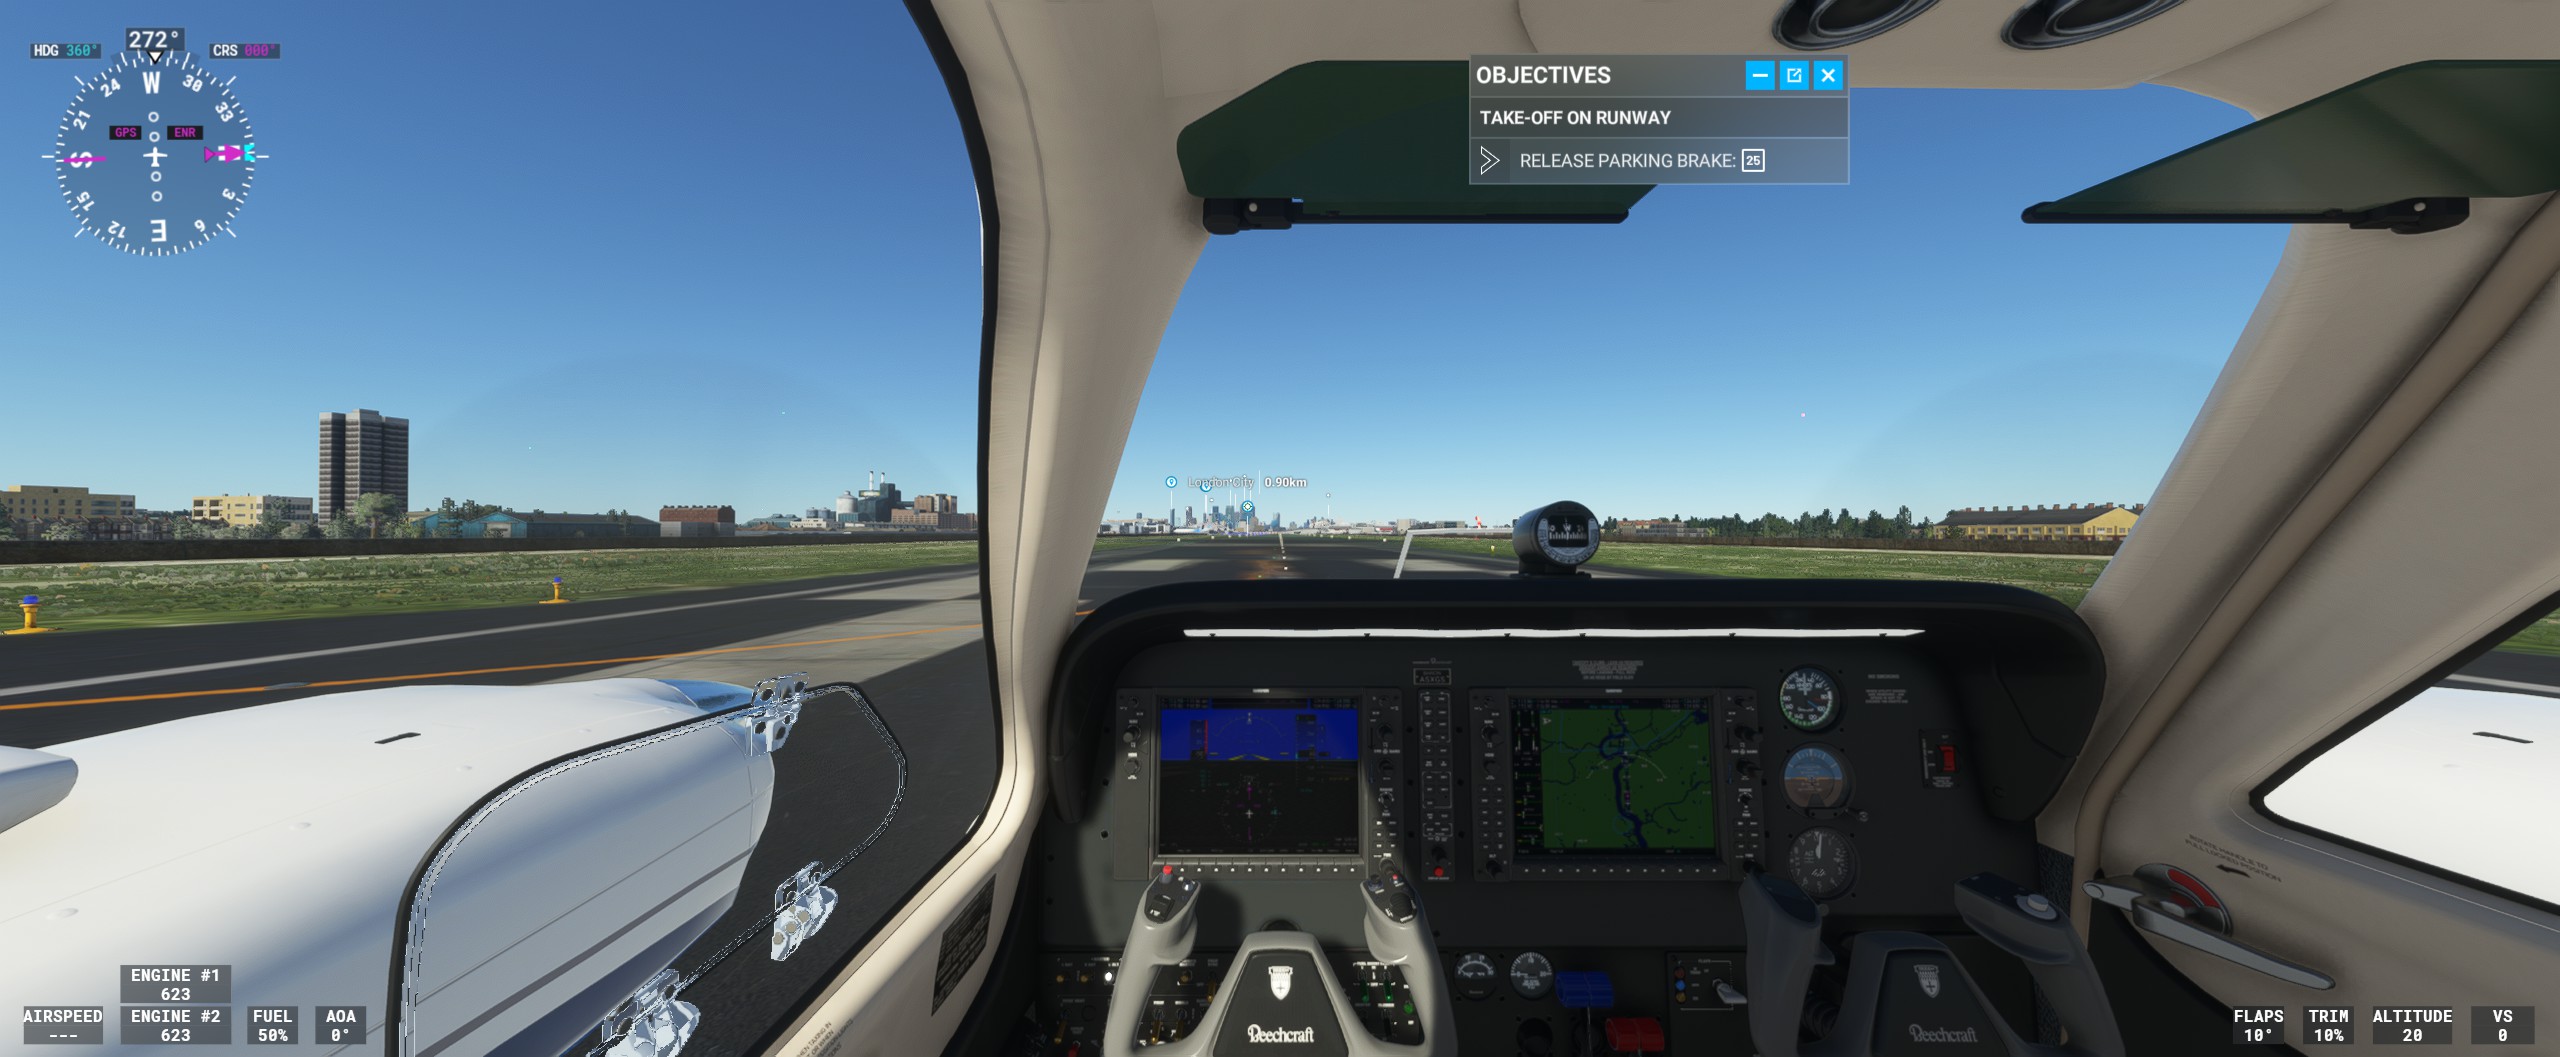 Microsoft Flight Simulator X: Steam Edition + Eye Tracking